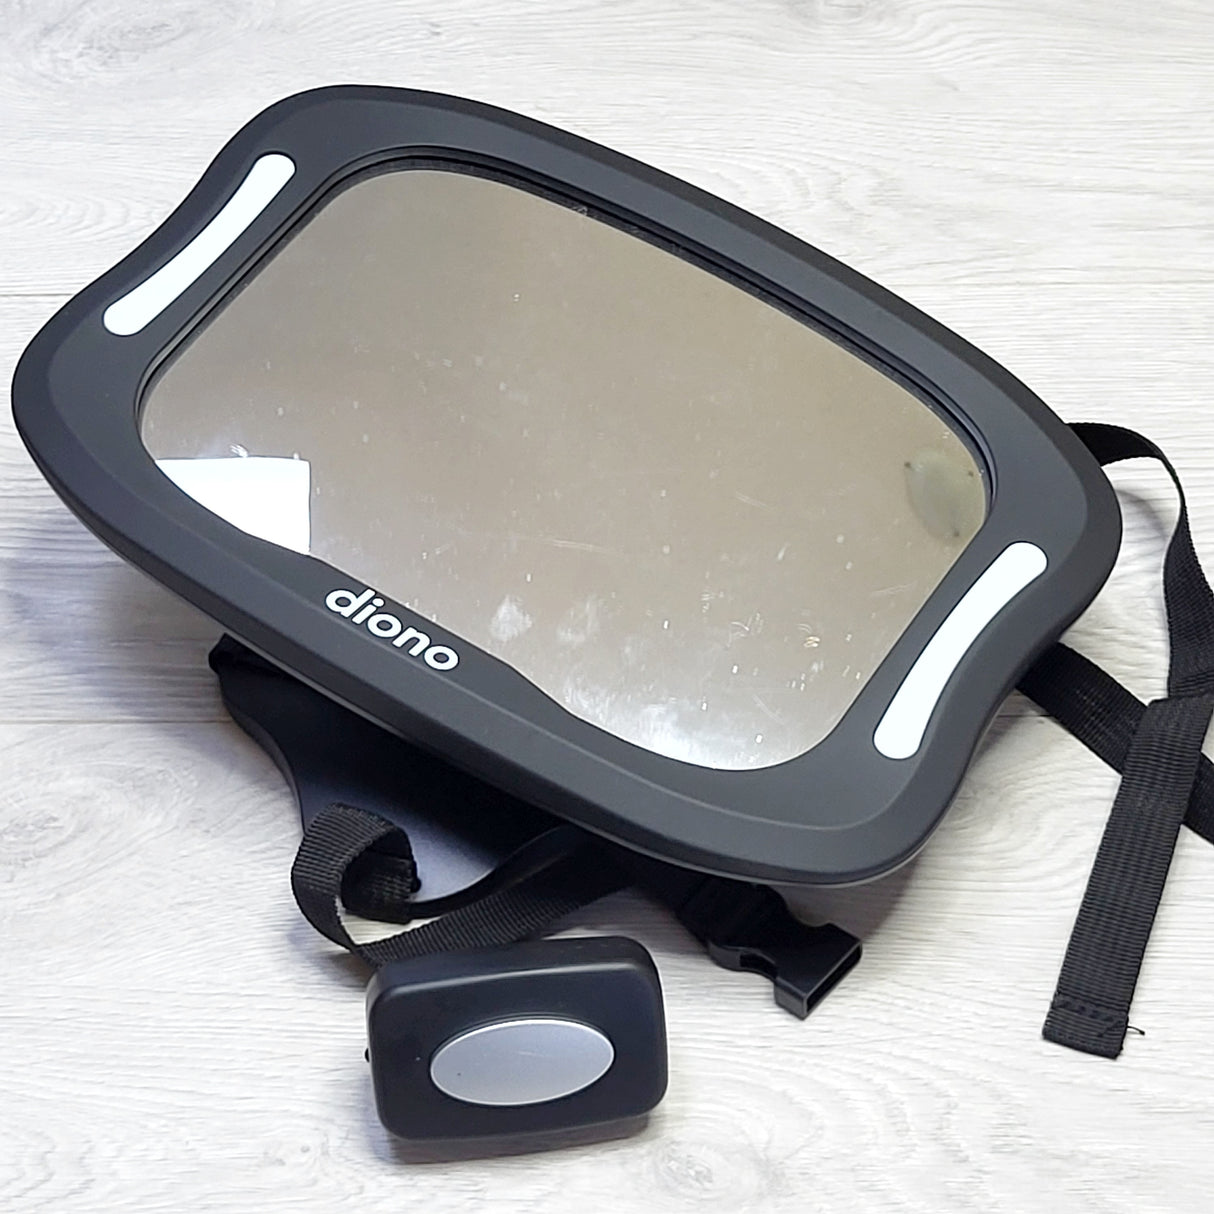 KJHN2 - Diono backseat mirror with LED light